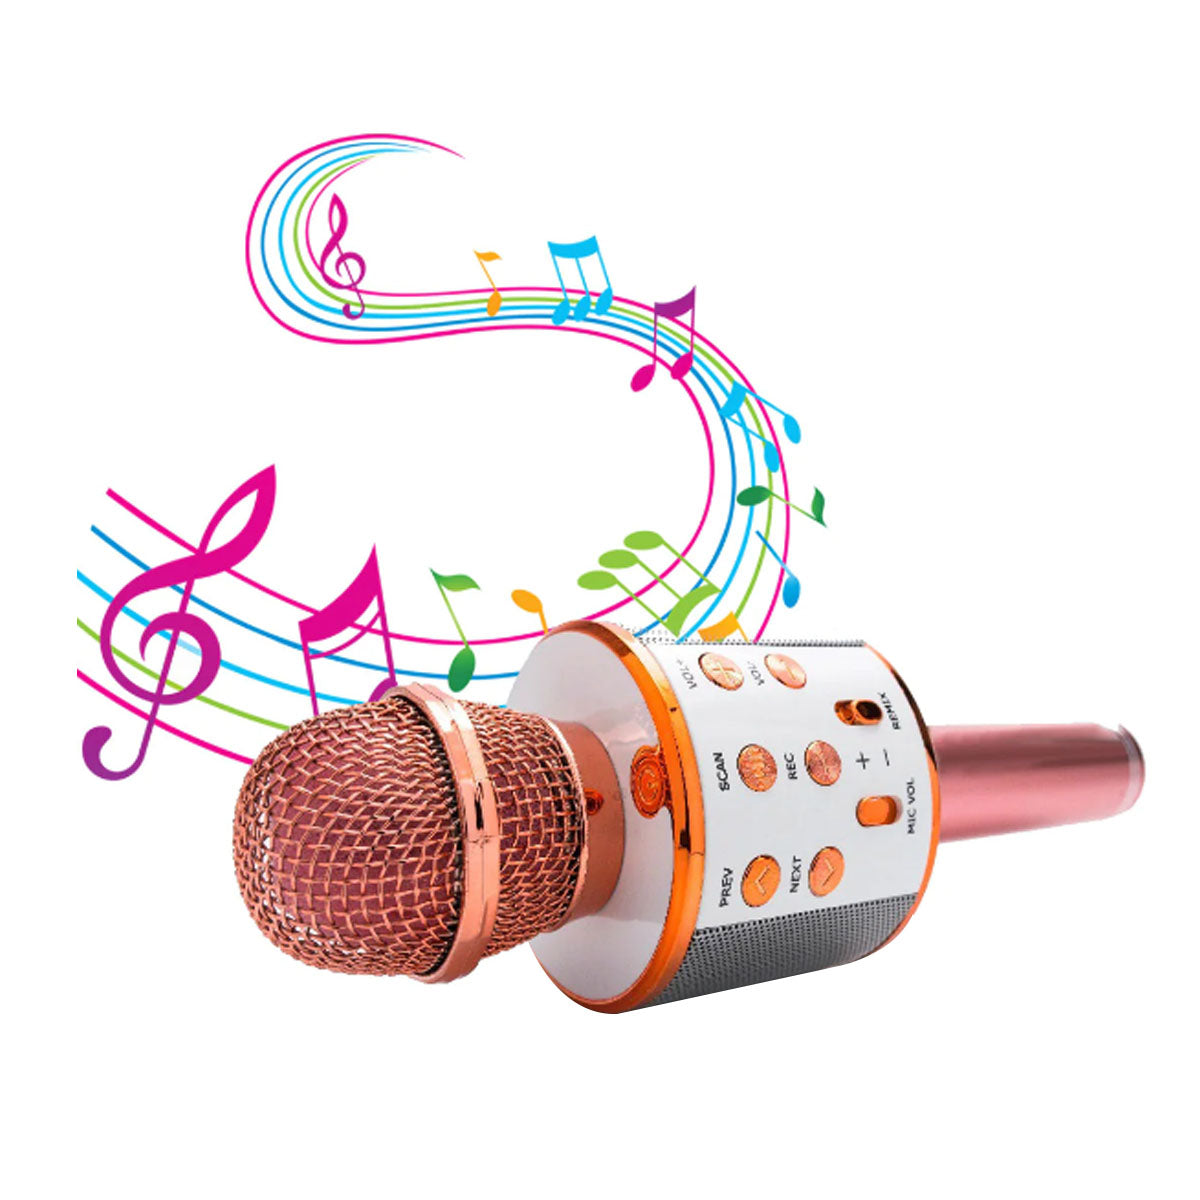 Miracle M90 - Micrófono de karaoke Bluetooth - Micrófono Bluetooth  inalámbrico - Micrófono inalámbrico para karaoke - Micrófono para niños y  adultos 